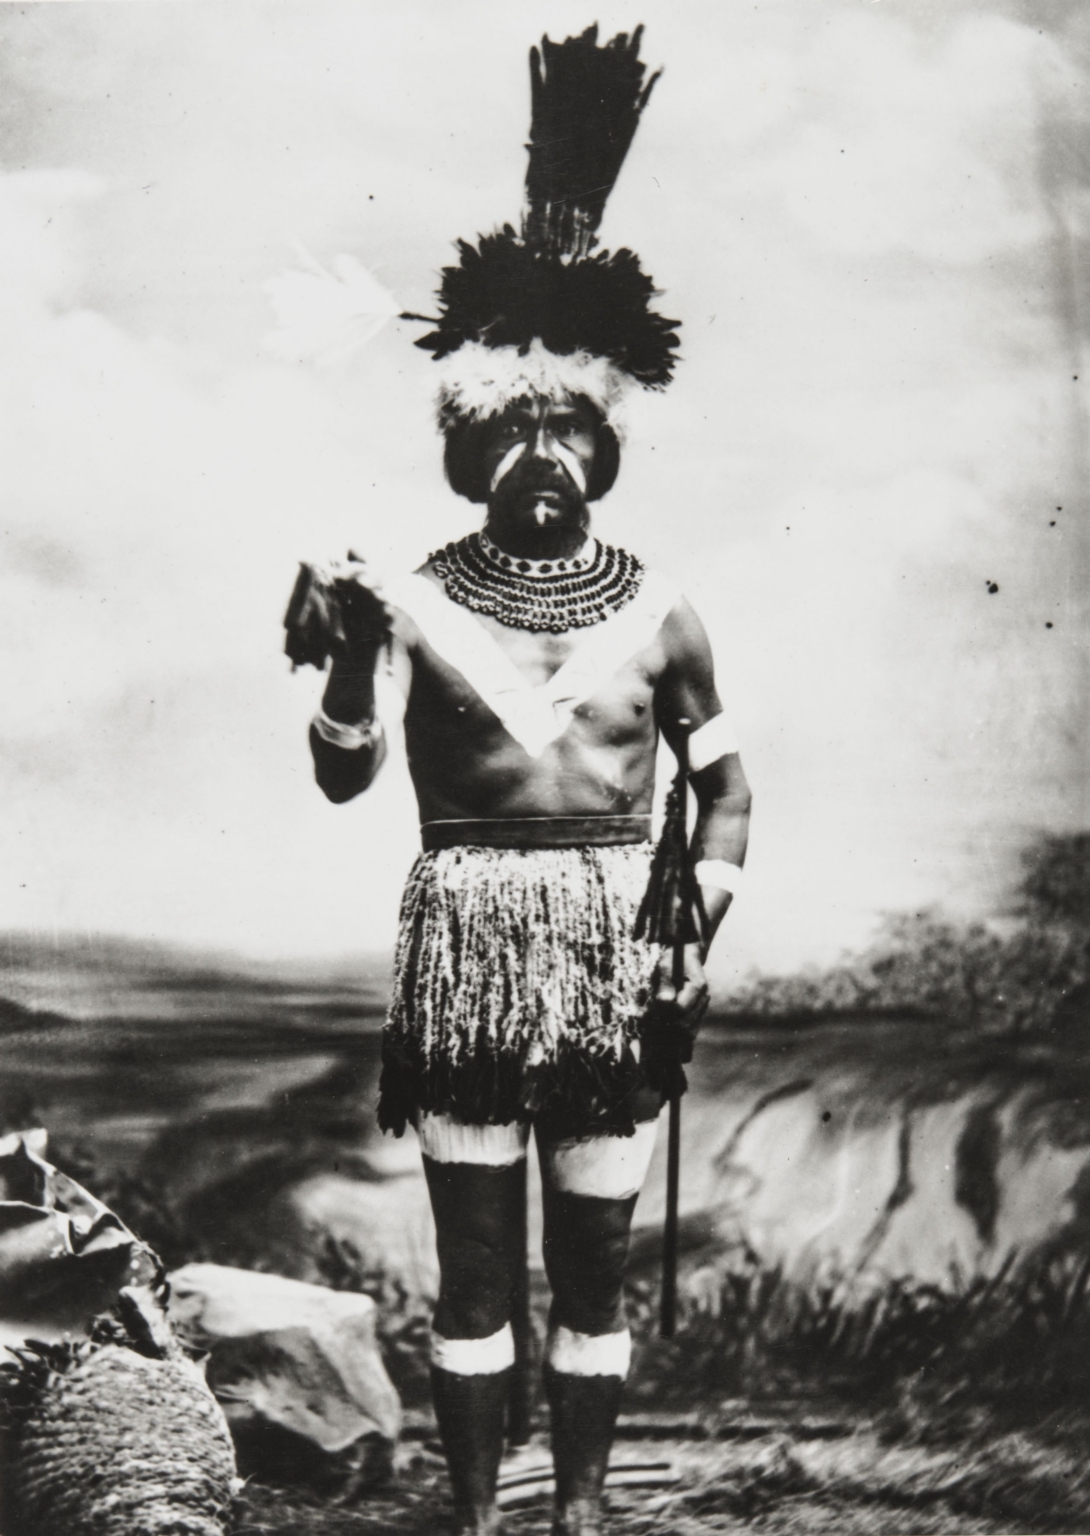 Rafael Solares (1822-1890), Chief of the Inéseño Chumash Community of Zanja de Cota. Photographed in traditional dancing regalia : 1878, by Léon de Cessac, a French anthropologist.